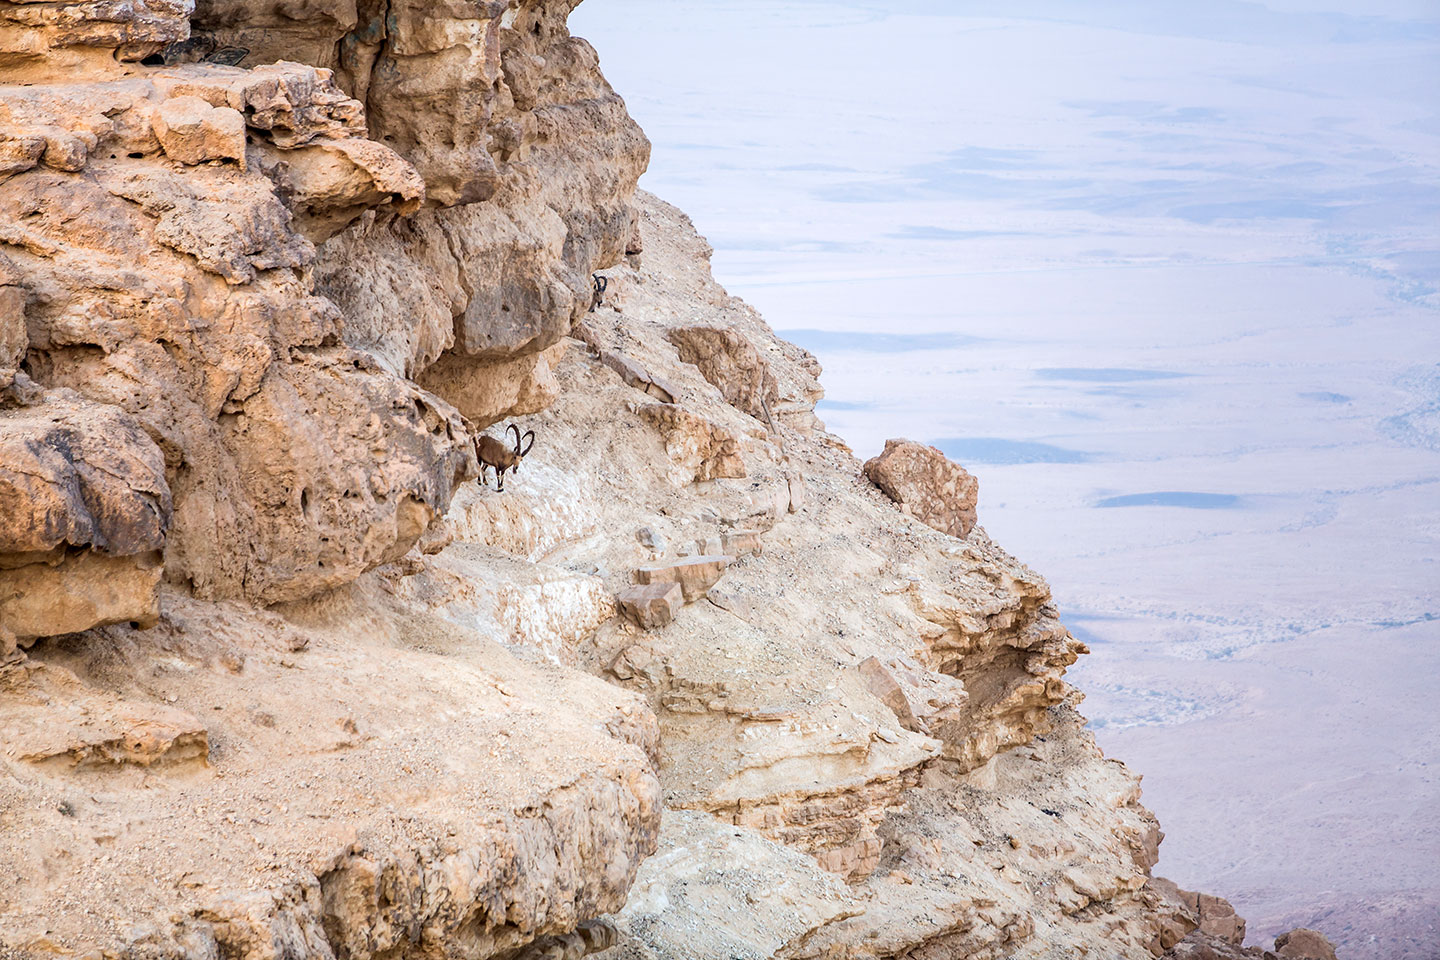 Mountain goat on a cliff in Mitzpe Ramon, Israel